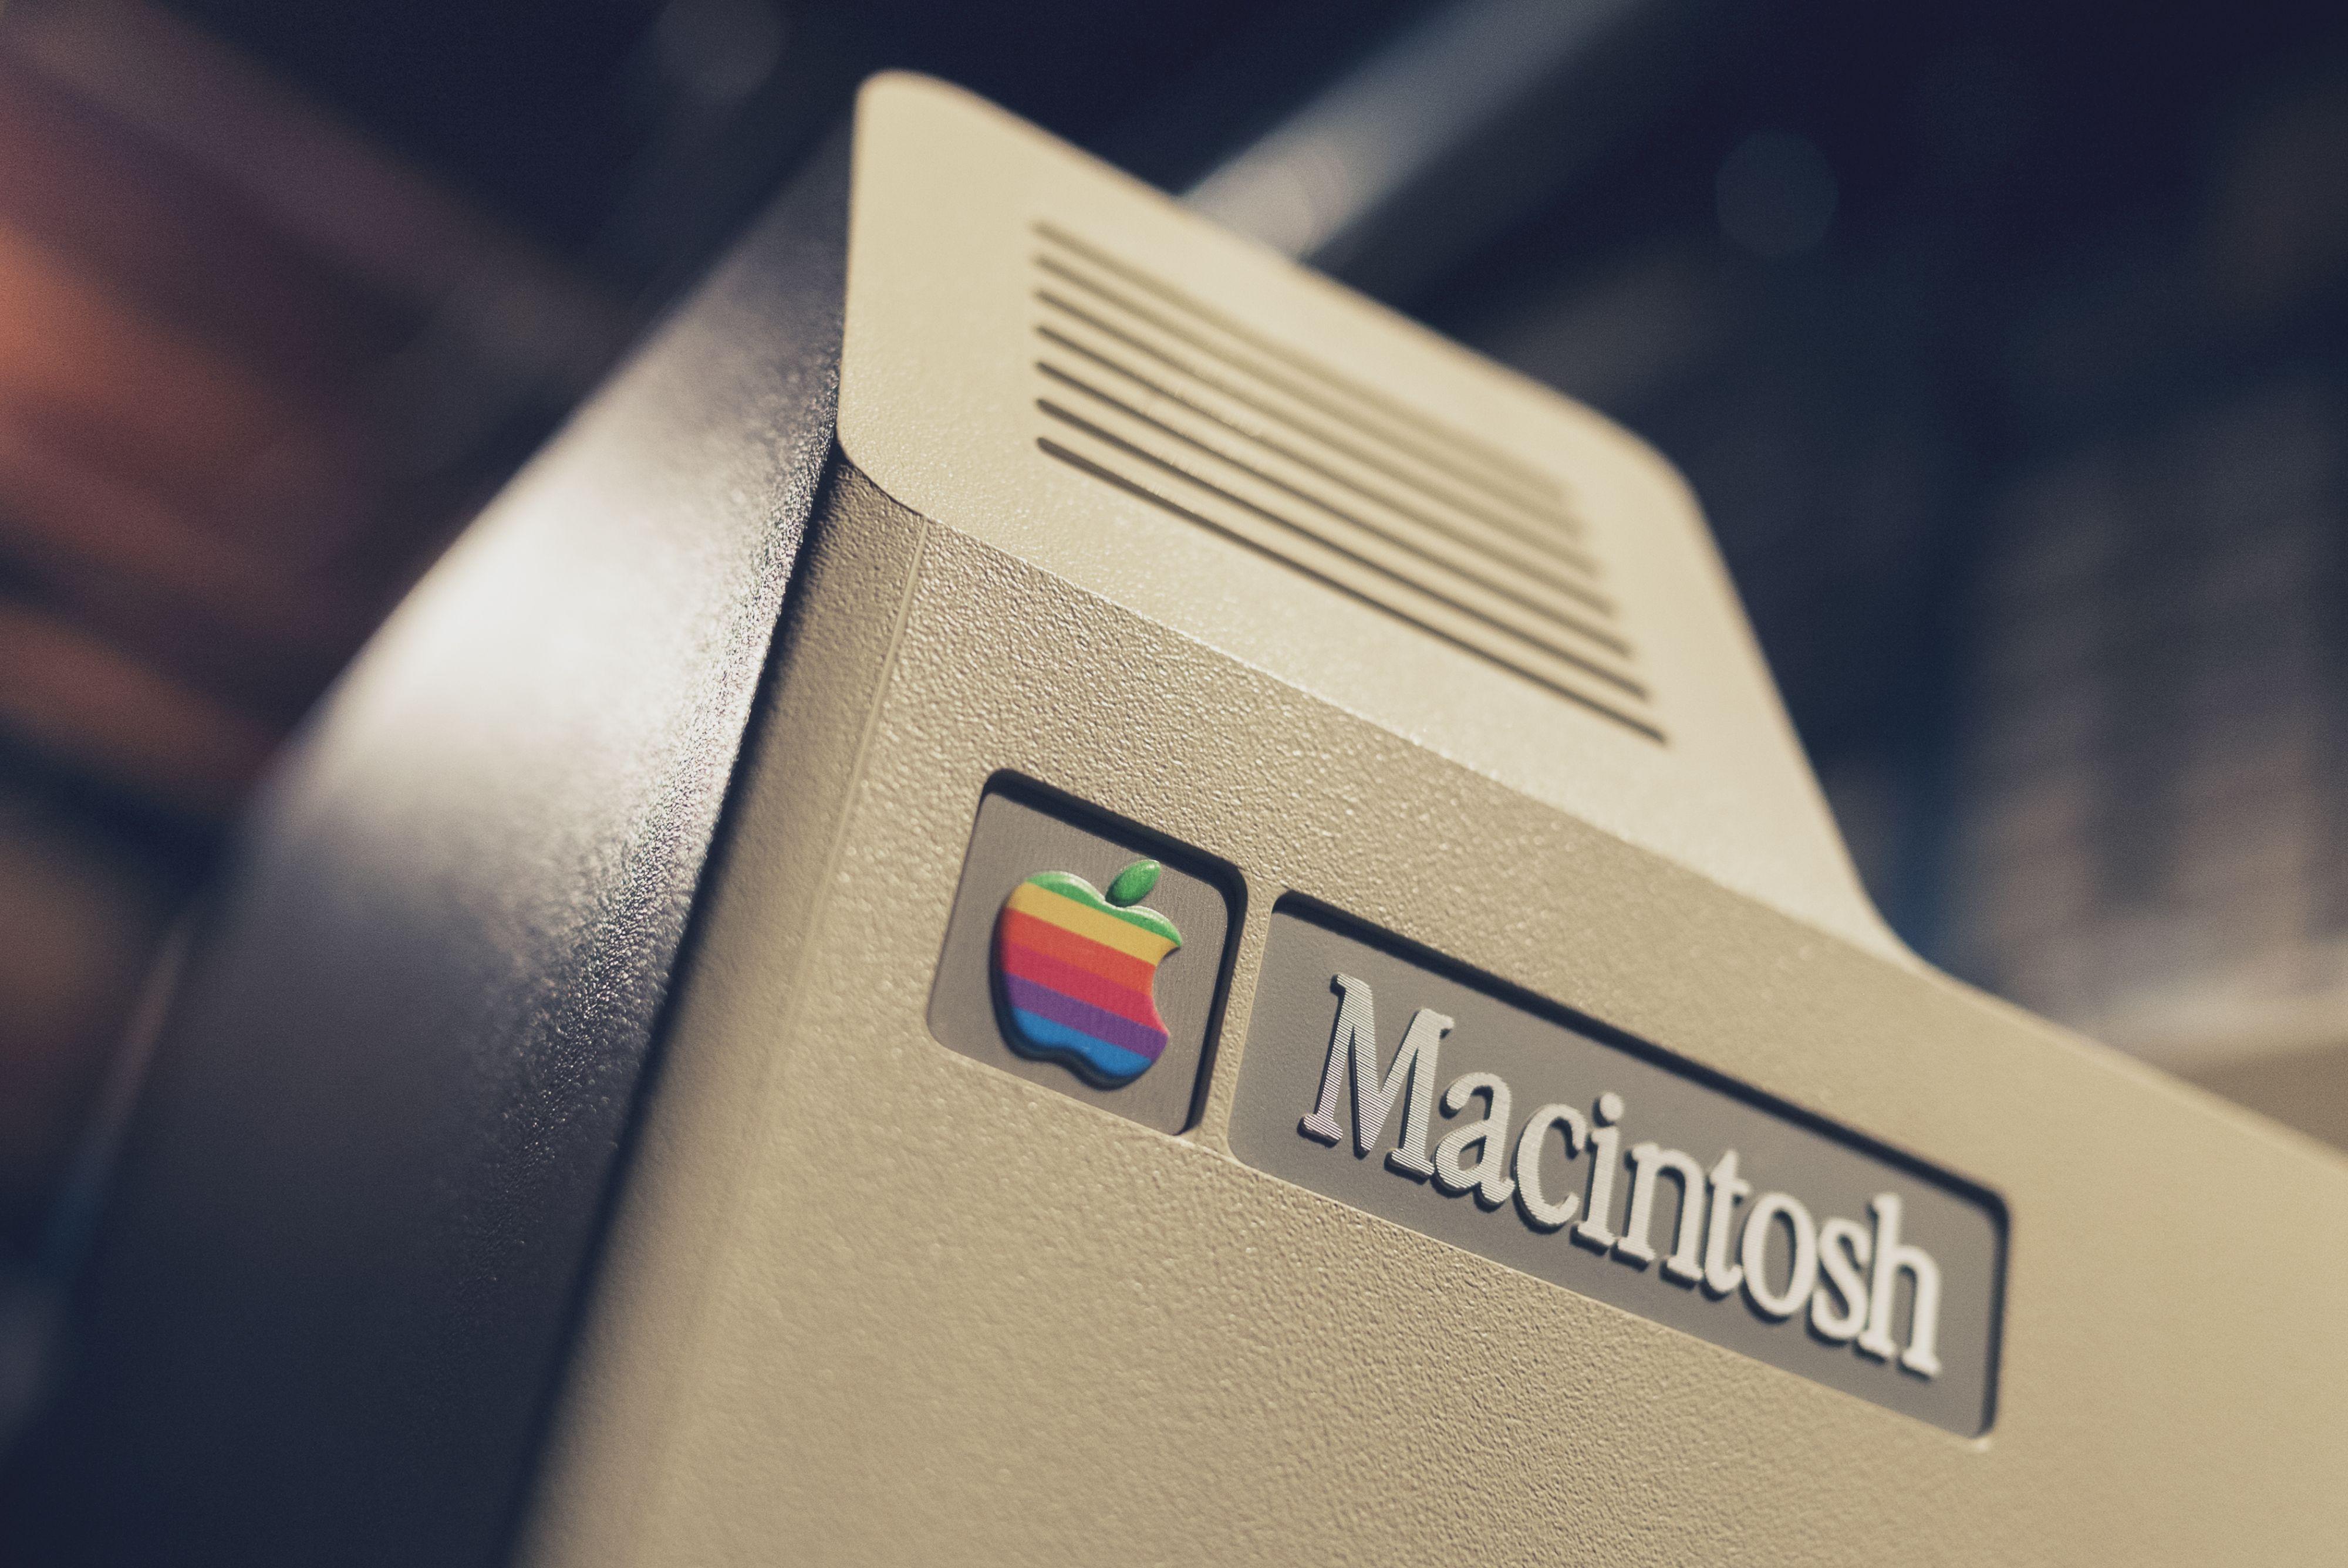 Macintosh Logo - Macintosh logo and badge - Fonts In Use